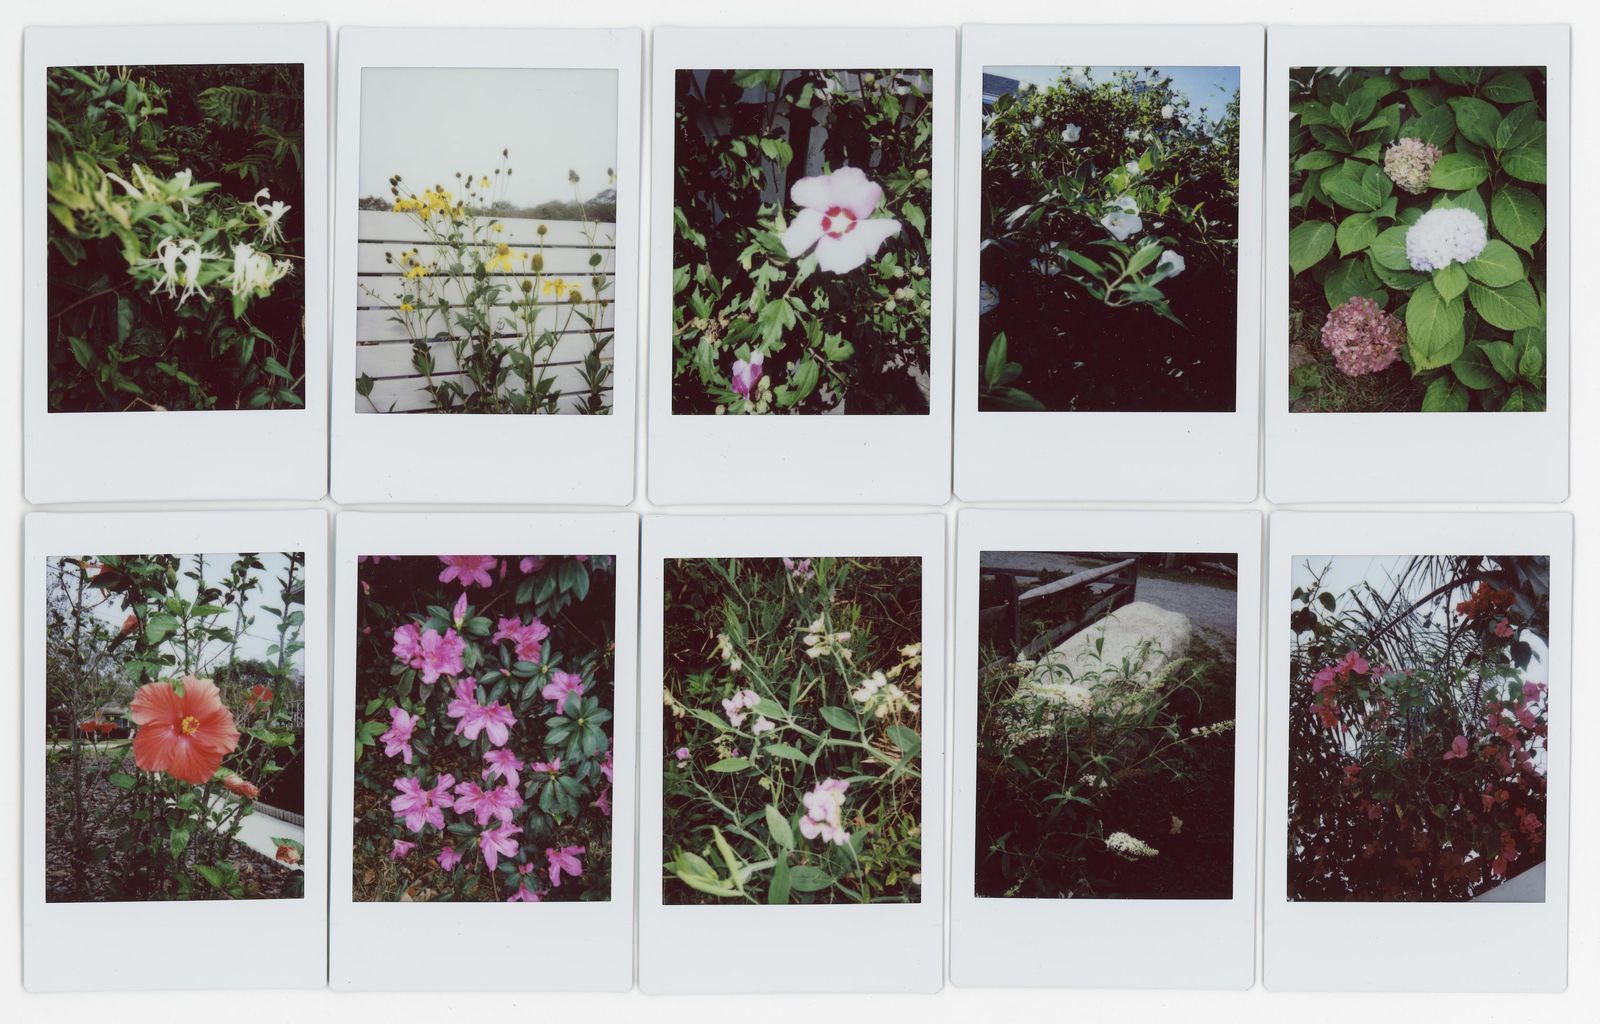 © RACHEL TREIDE - "A Minute Fraction of All the Flowers I've Ever Seen," photographs 101-110